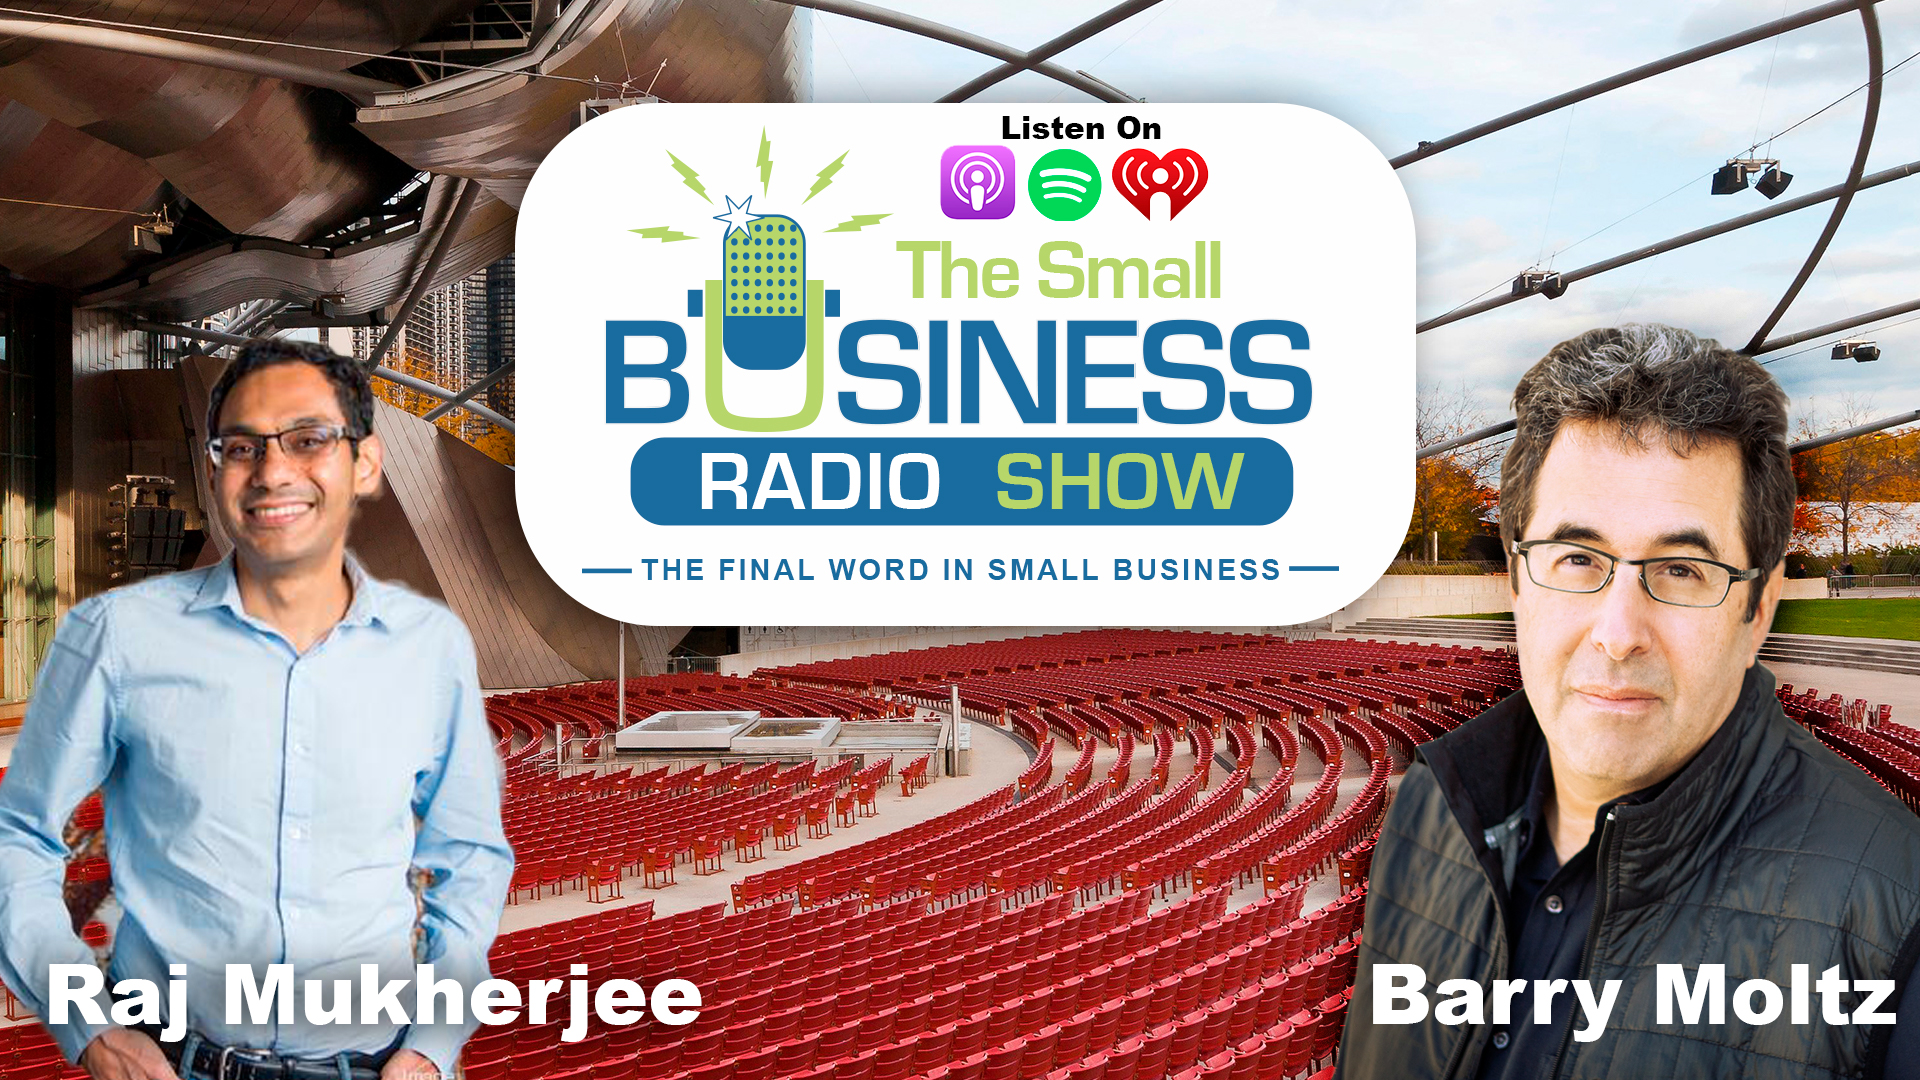 Raj Mukherjee on The Small Business Radio Show